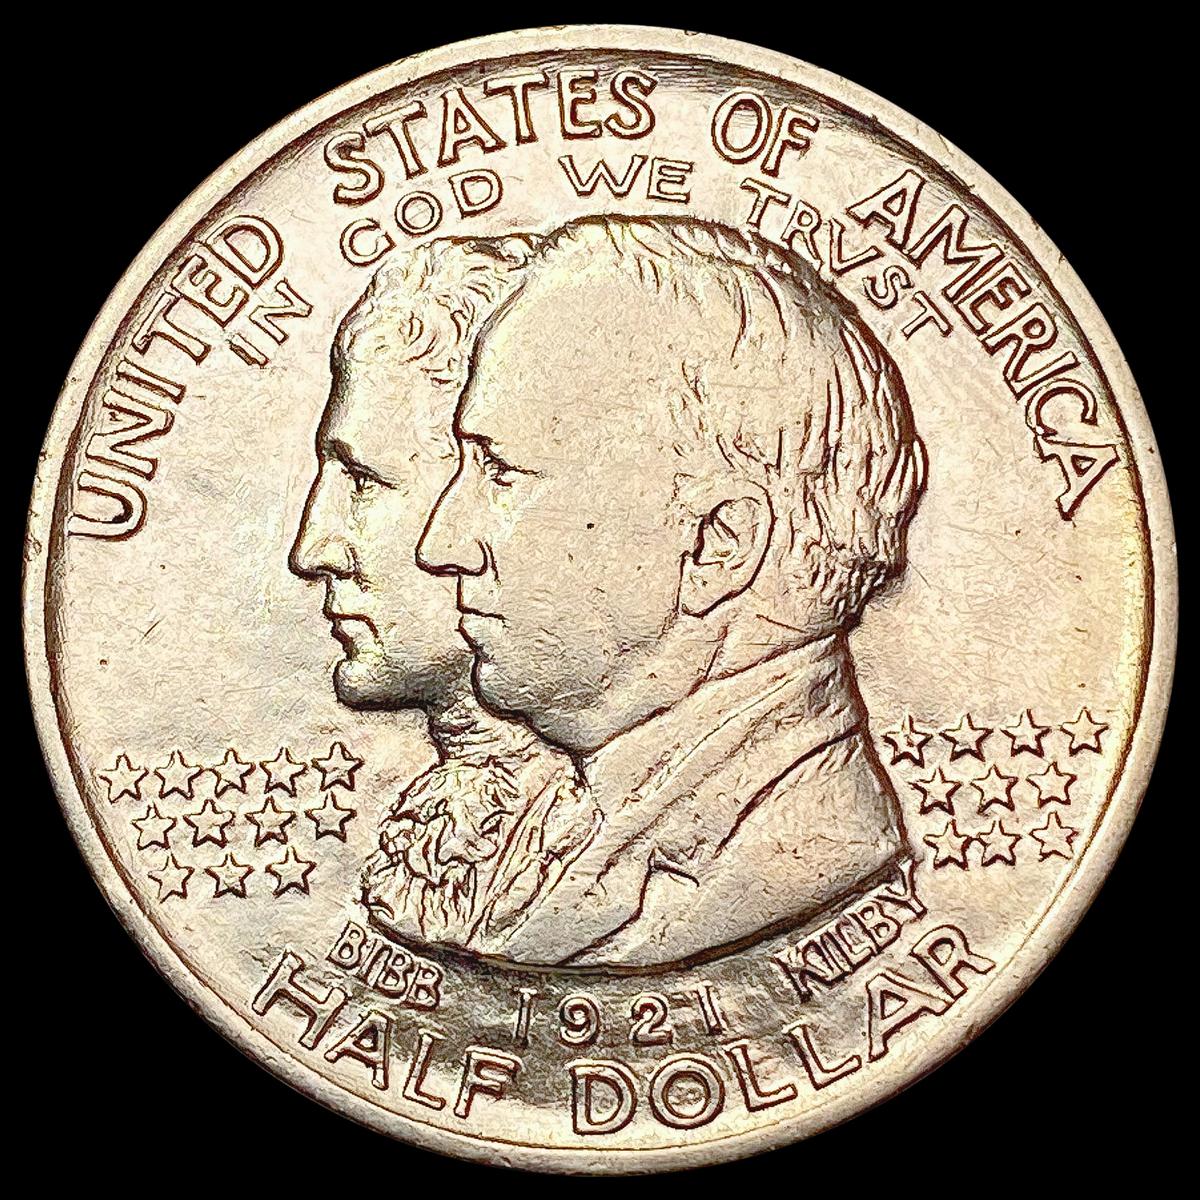 1921 Alabama Half Dollar CLOSELY UNCIRCULATED